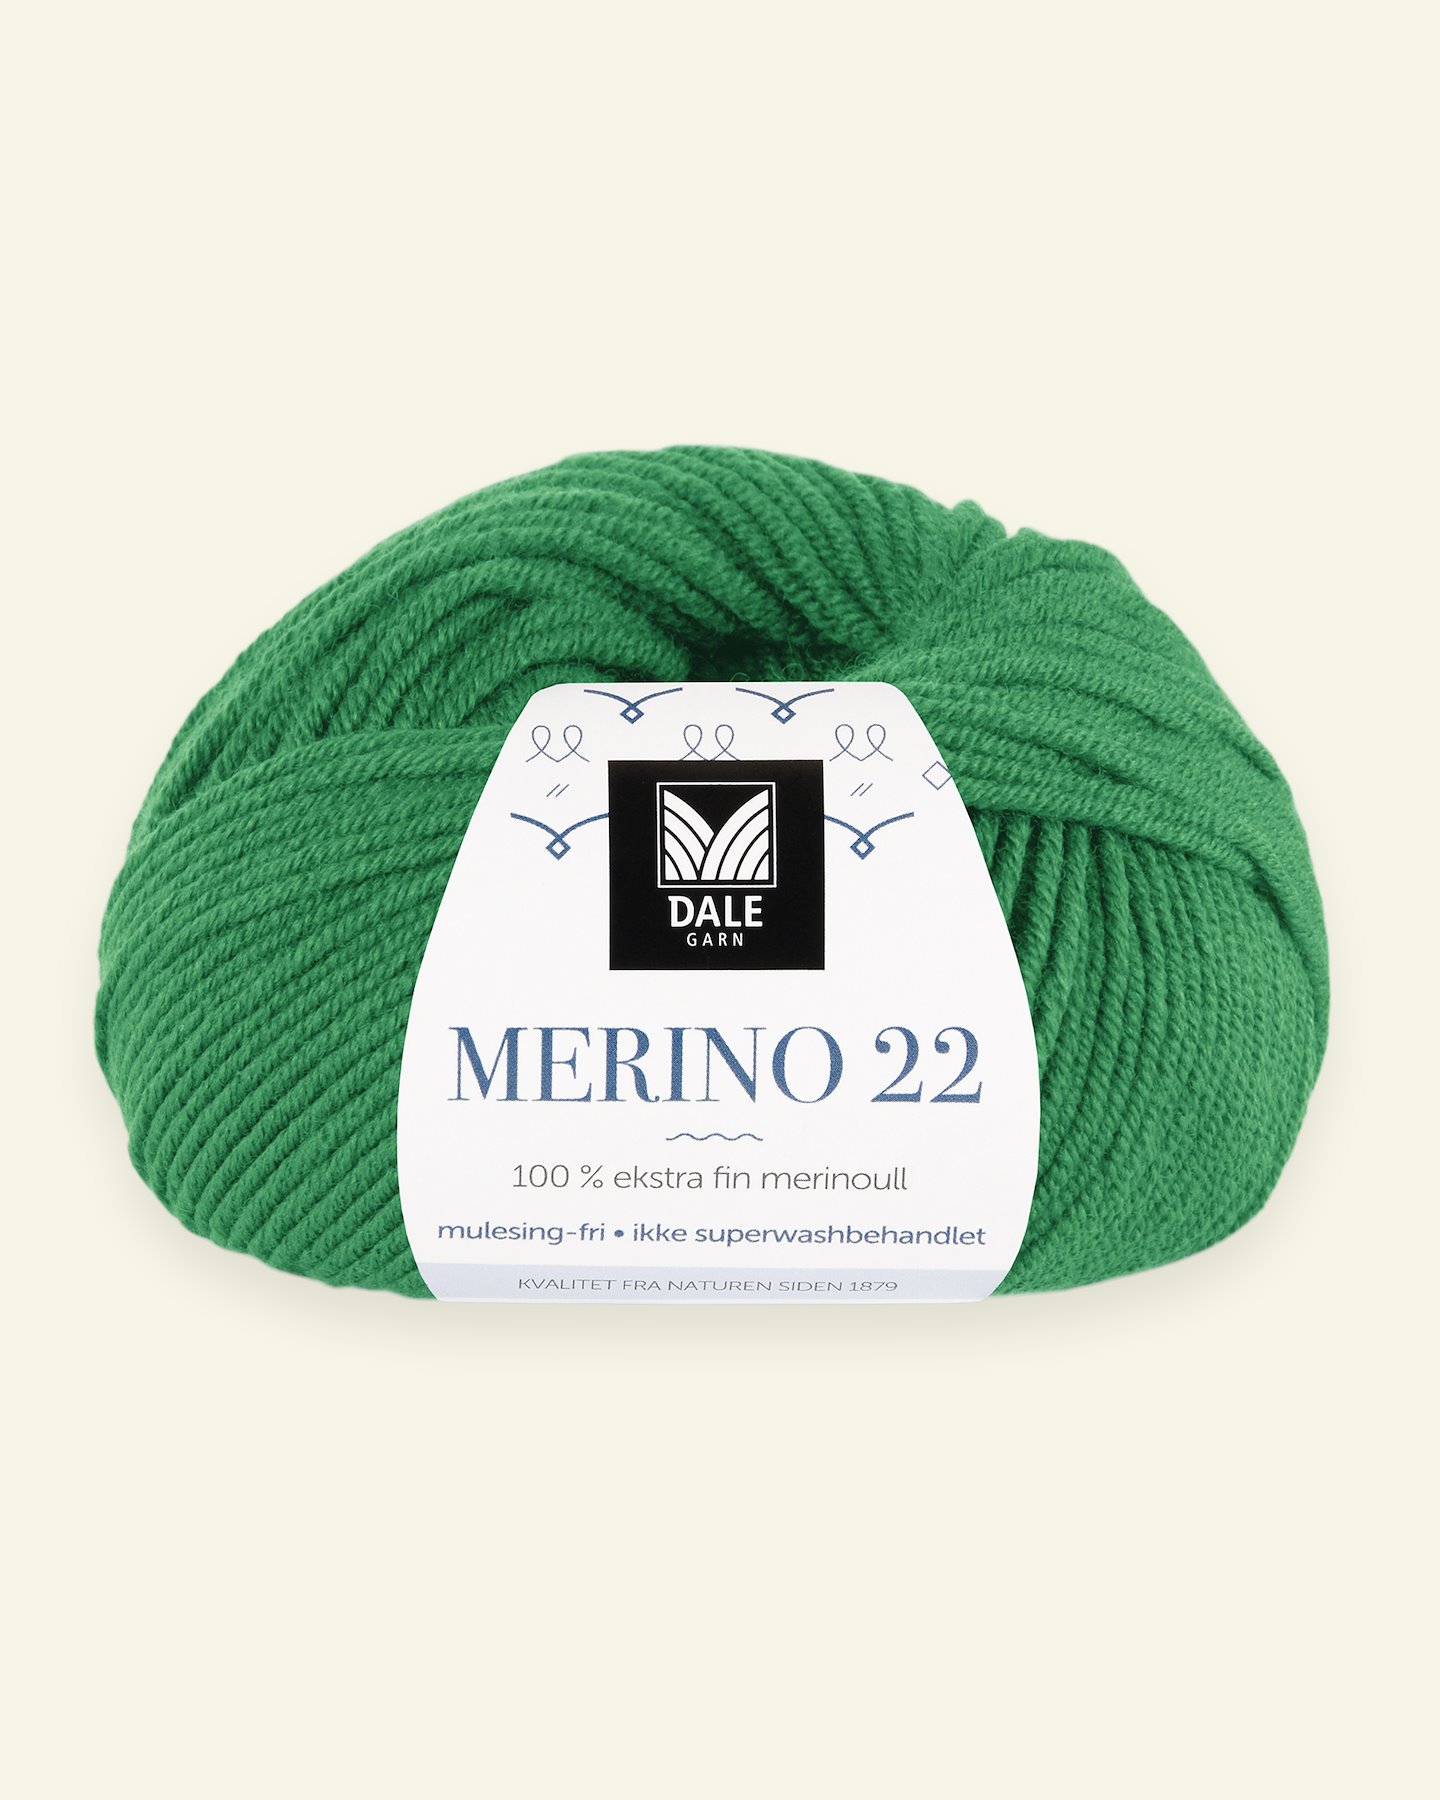 Dale Garn, 100% ekstra fint merinogarn "Merino 22", grøn (2031) 90000392_pack